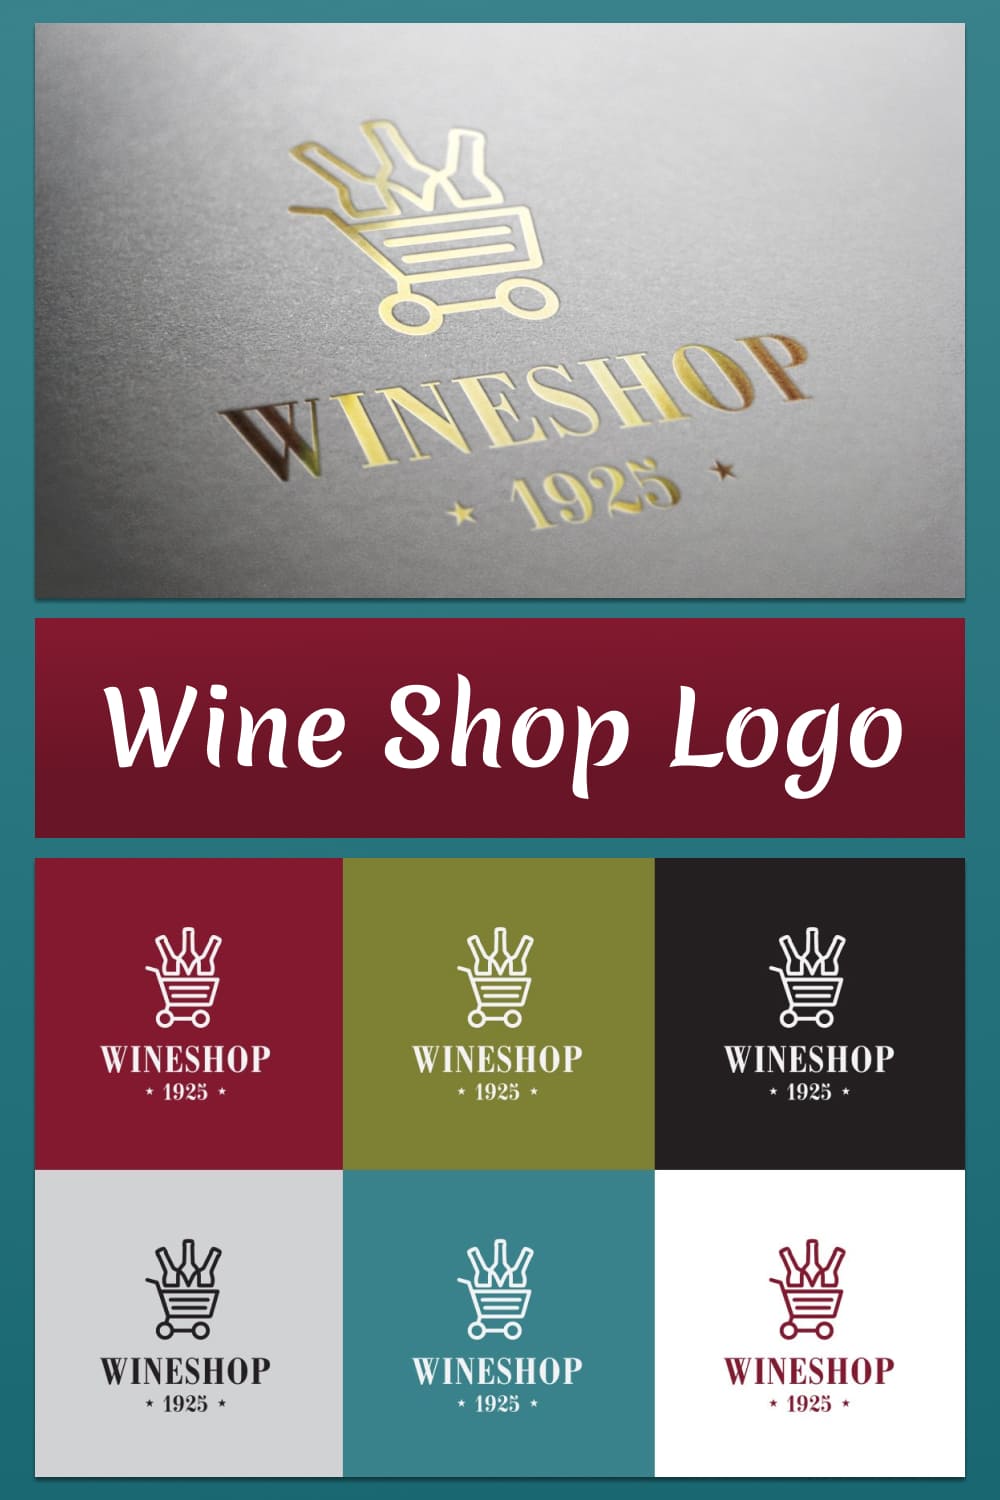 Wine Shop Logo - Pinterest Image Preview.